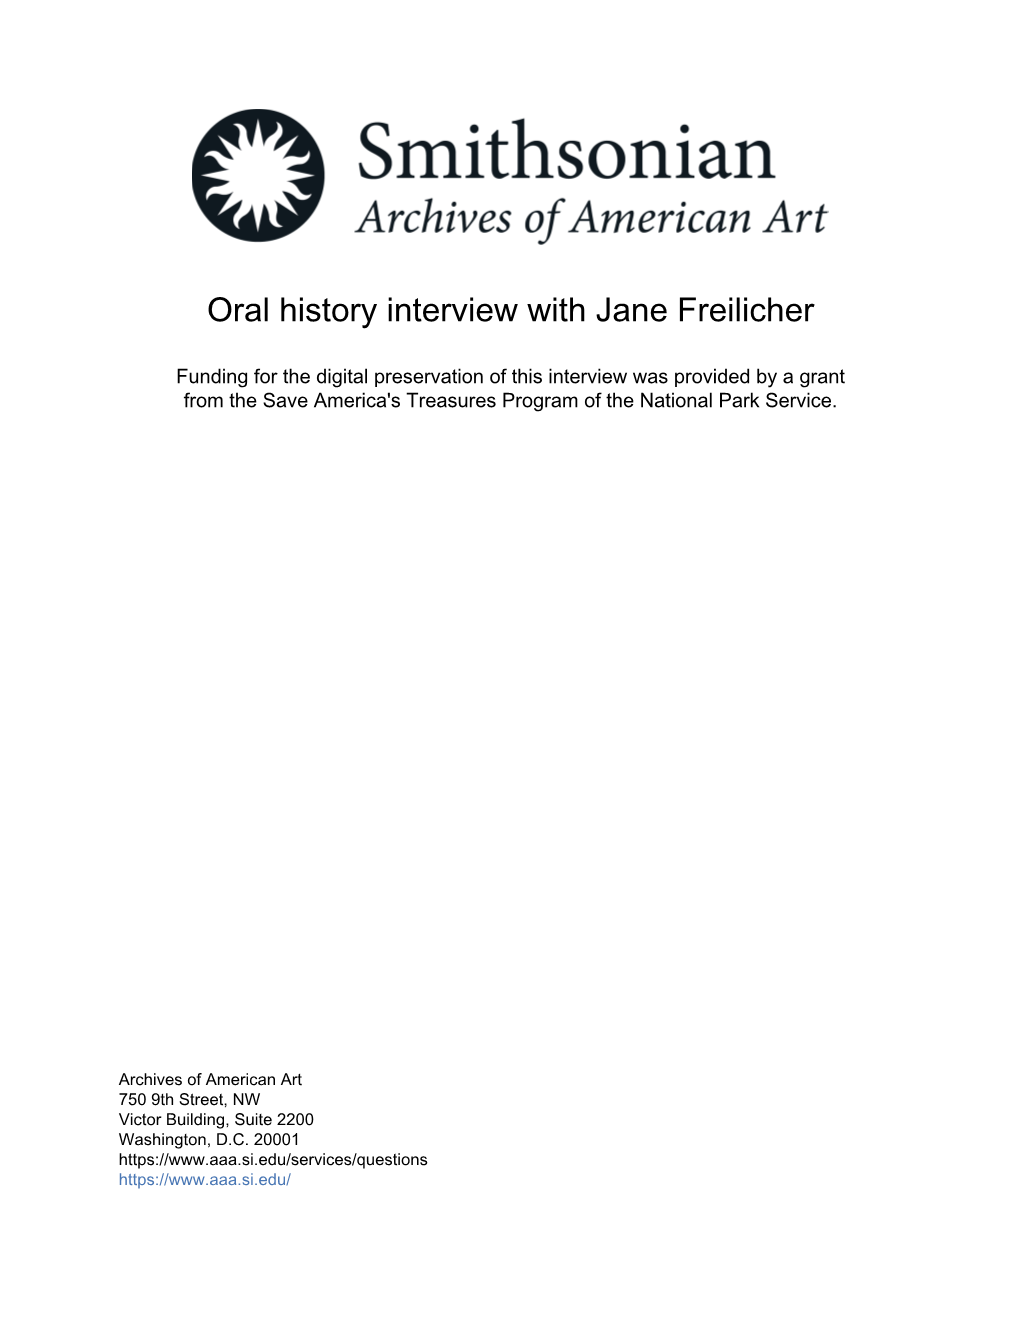 Oral History Interview with Jane Freilicher